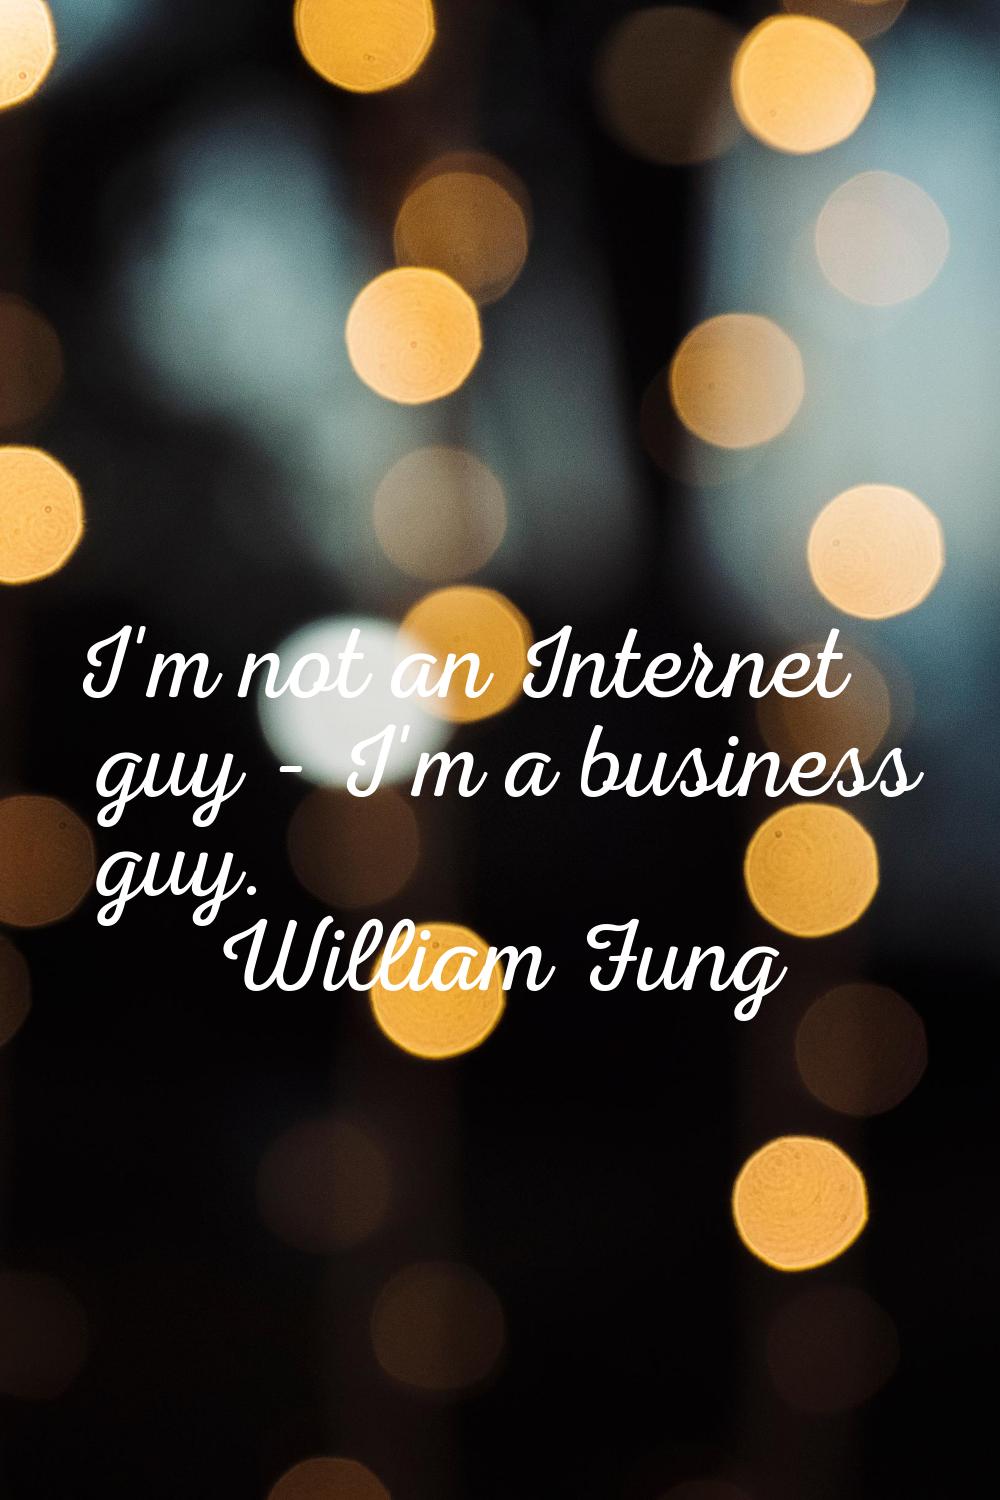 I'm not an Internet guy - I'm a business guy.